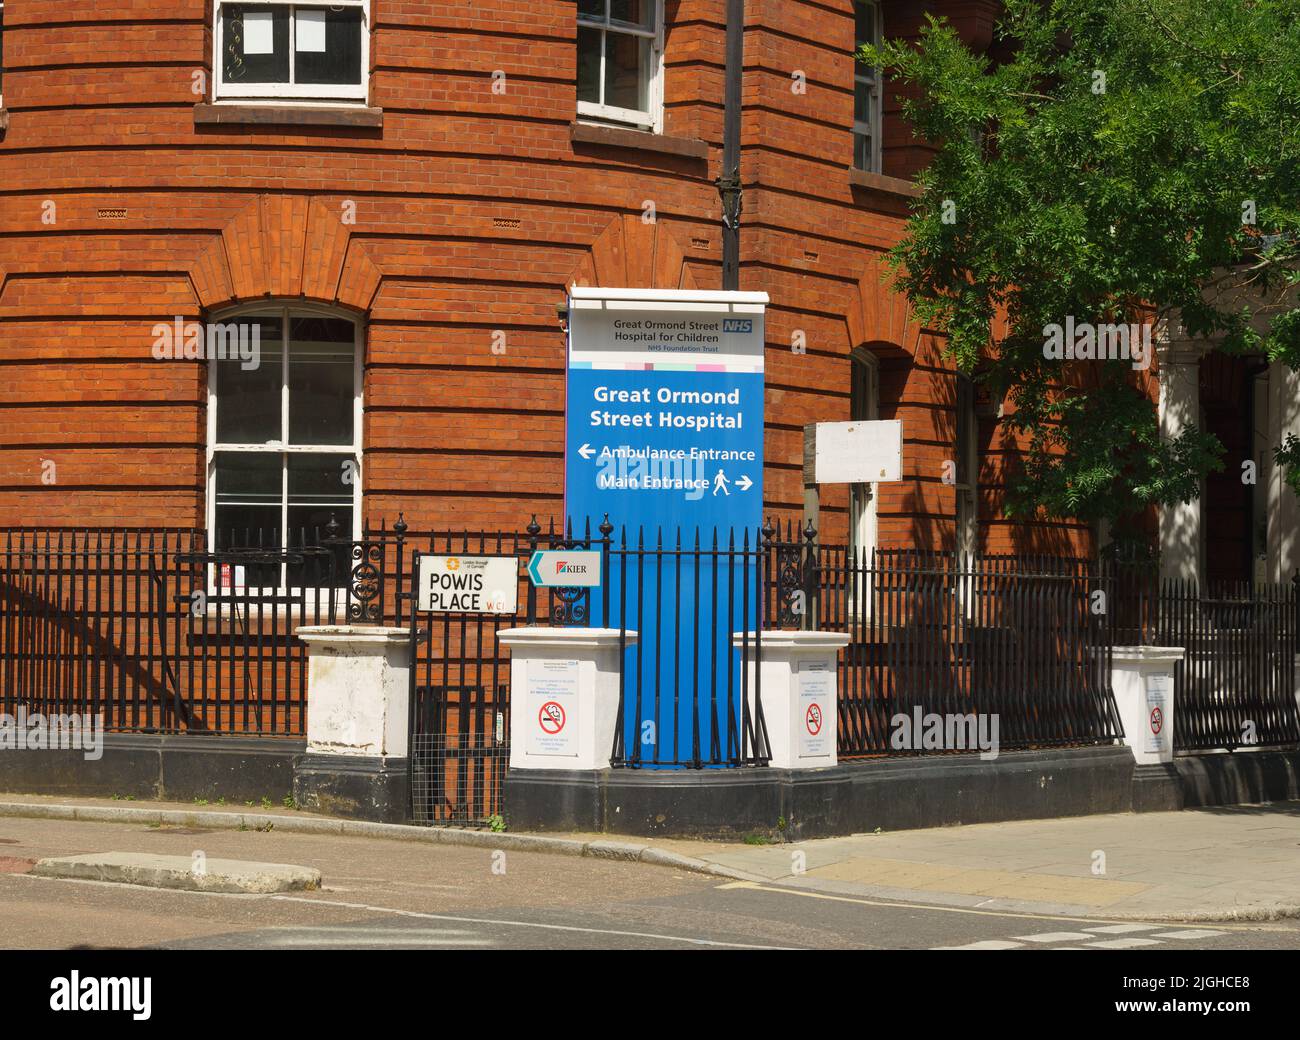 Señalización en Powis Place, indicando Great Ormond Street Hospital, Londres, Reino Unido Foto de stock